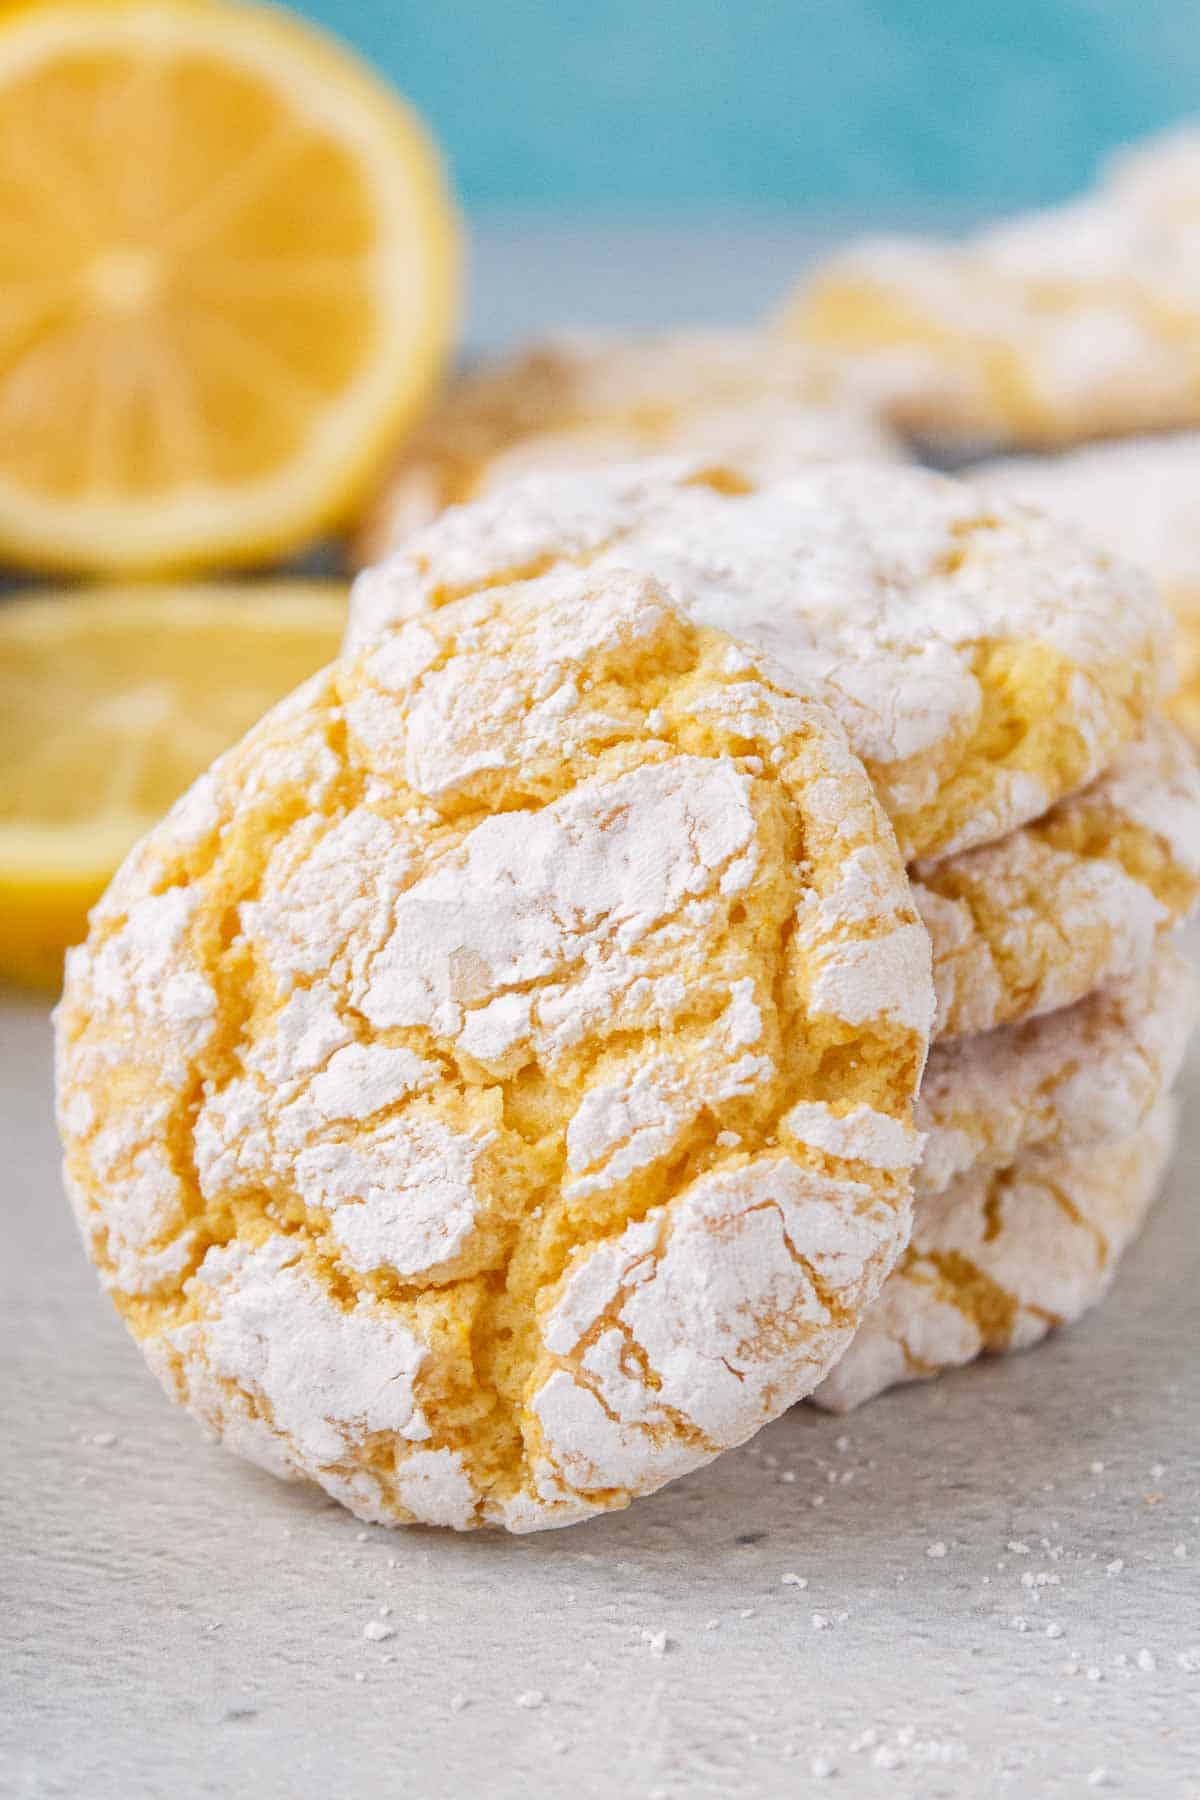 Lemon Cool Whip Cookies